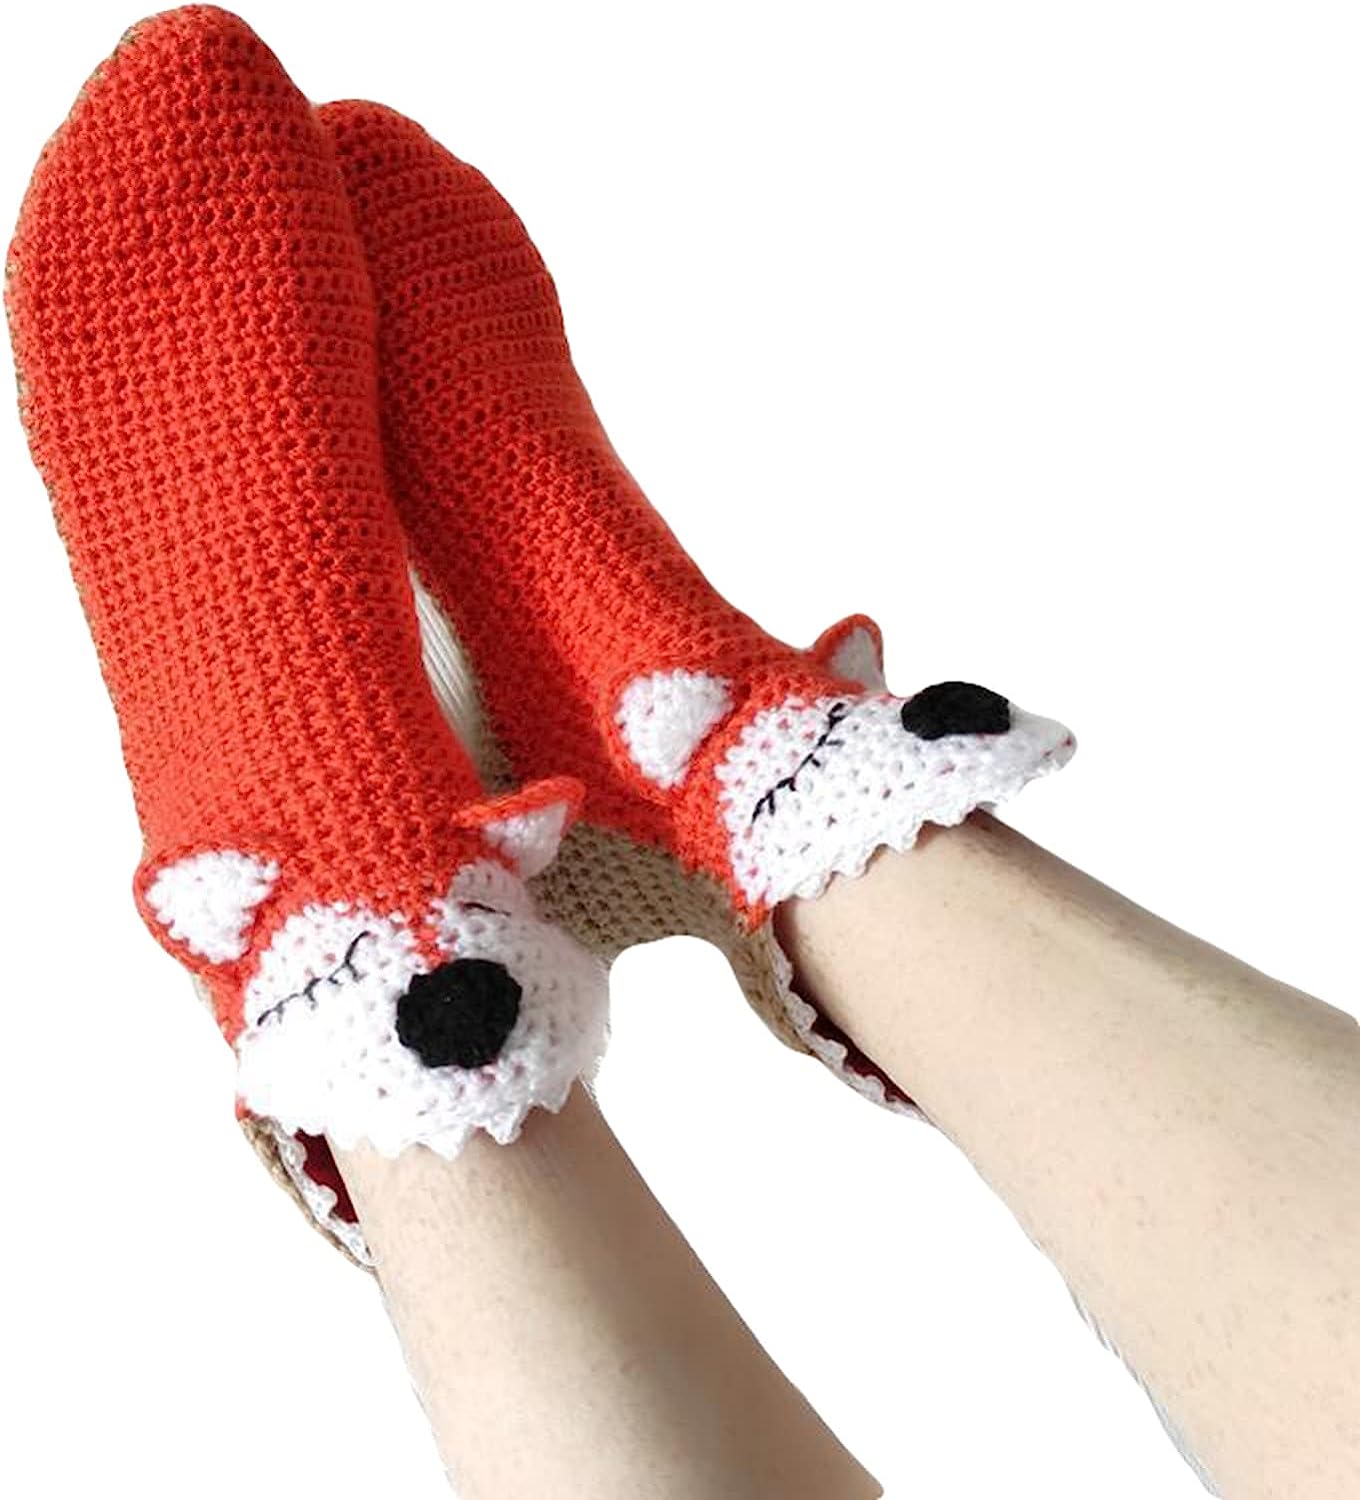 THATLILSHOP One Size / Fox Women Men Novelty Animal Pattern Socks Crazy Funny Knit Crocodile Socks Funny Gifts